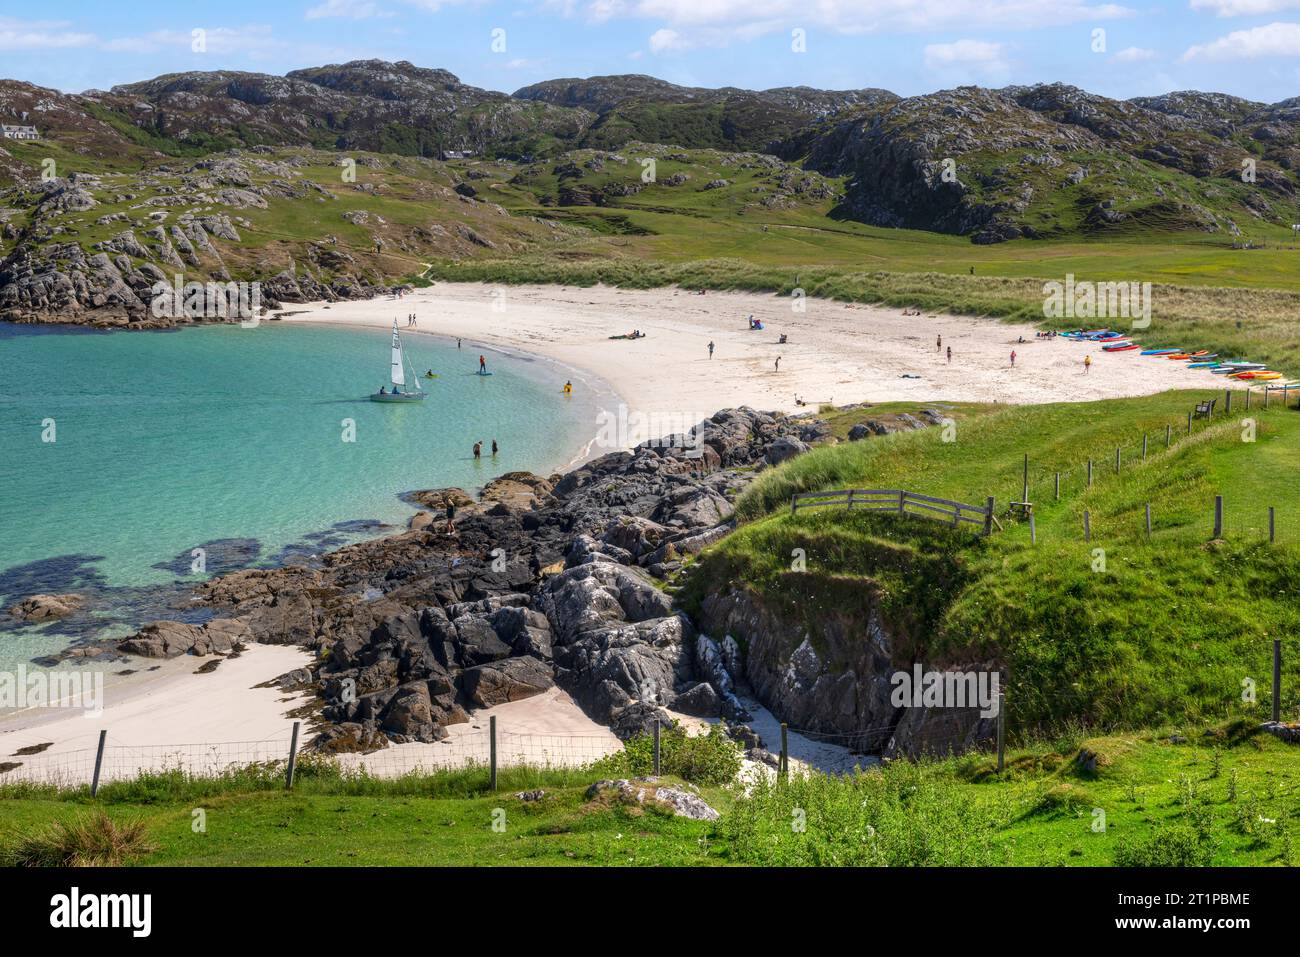 Achmelvich Beach è una splendida spiaggia di sabbia bianca situata nella baia di Achmelvich a Sutherland, in Scozia. Foto Stock